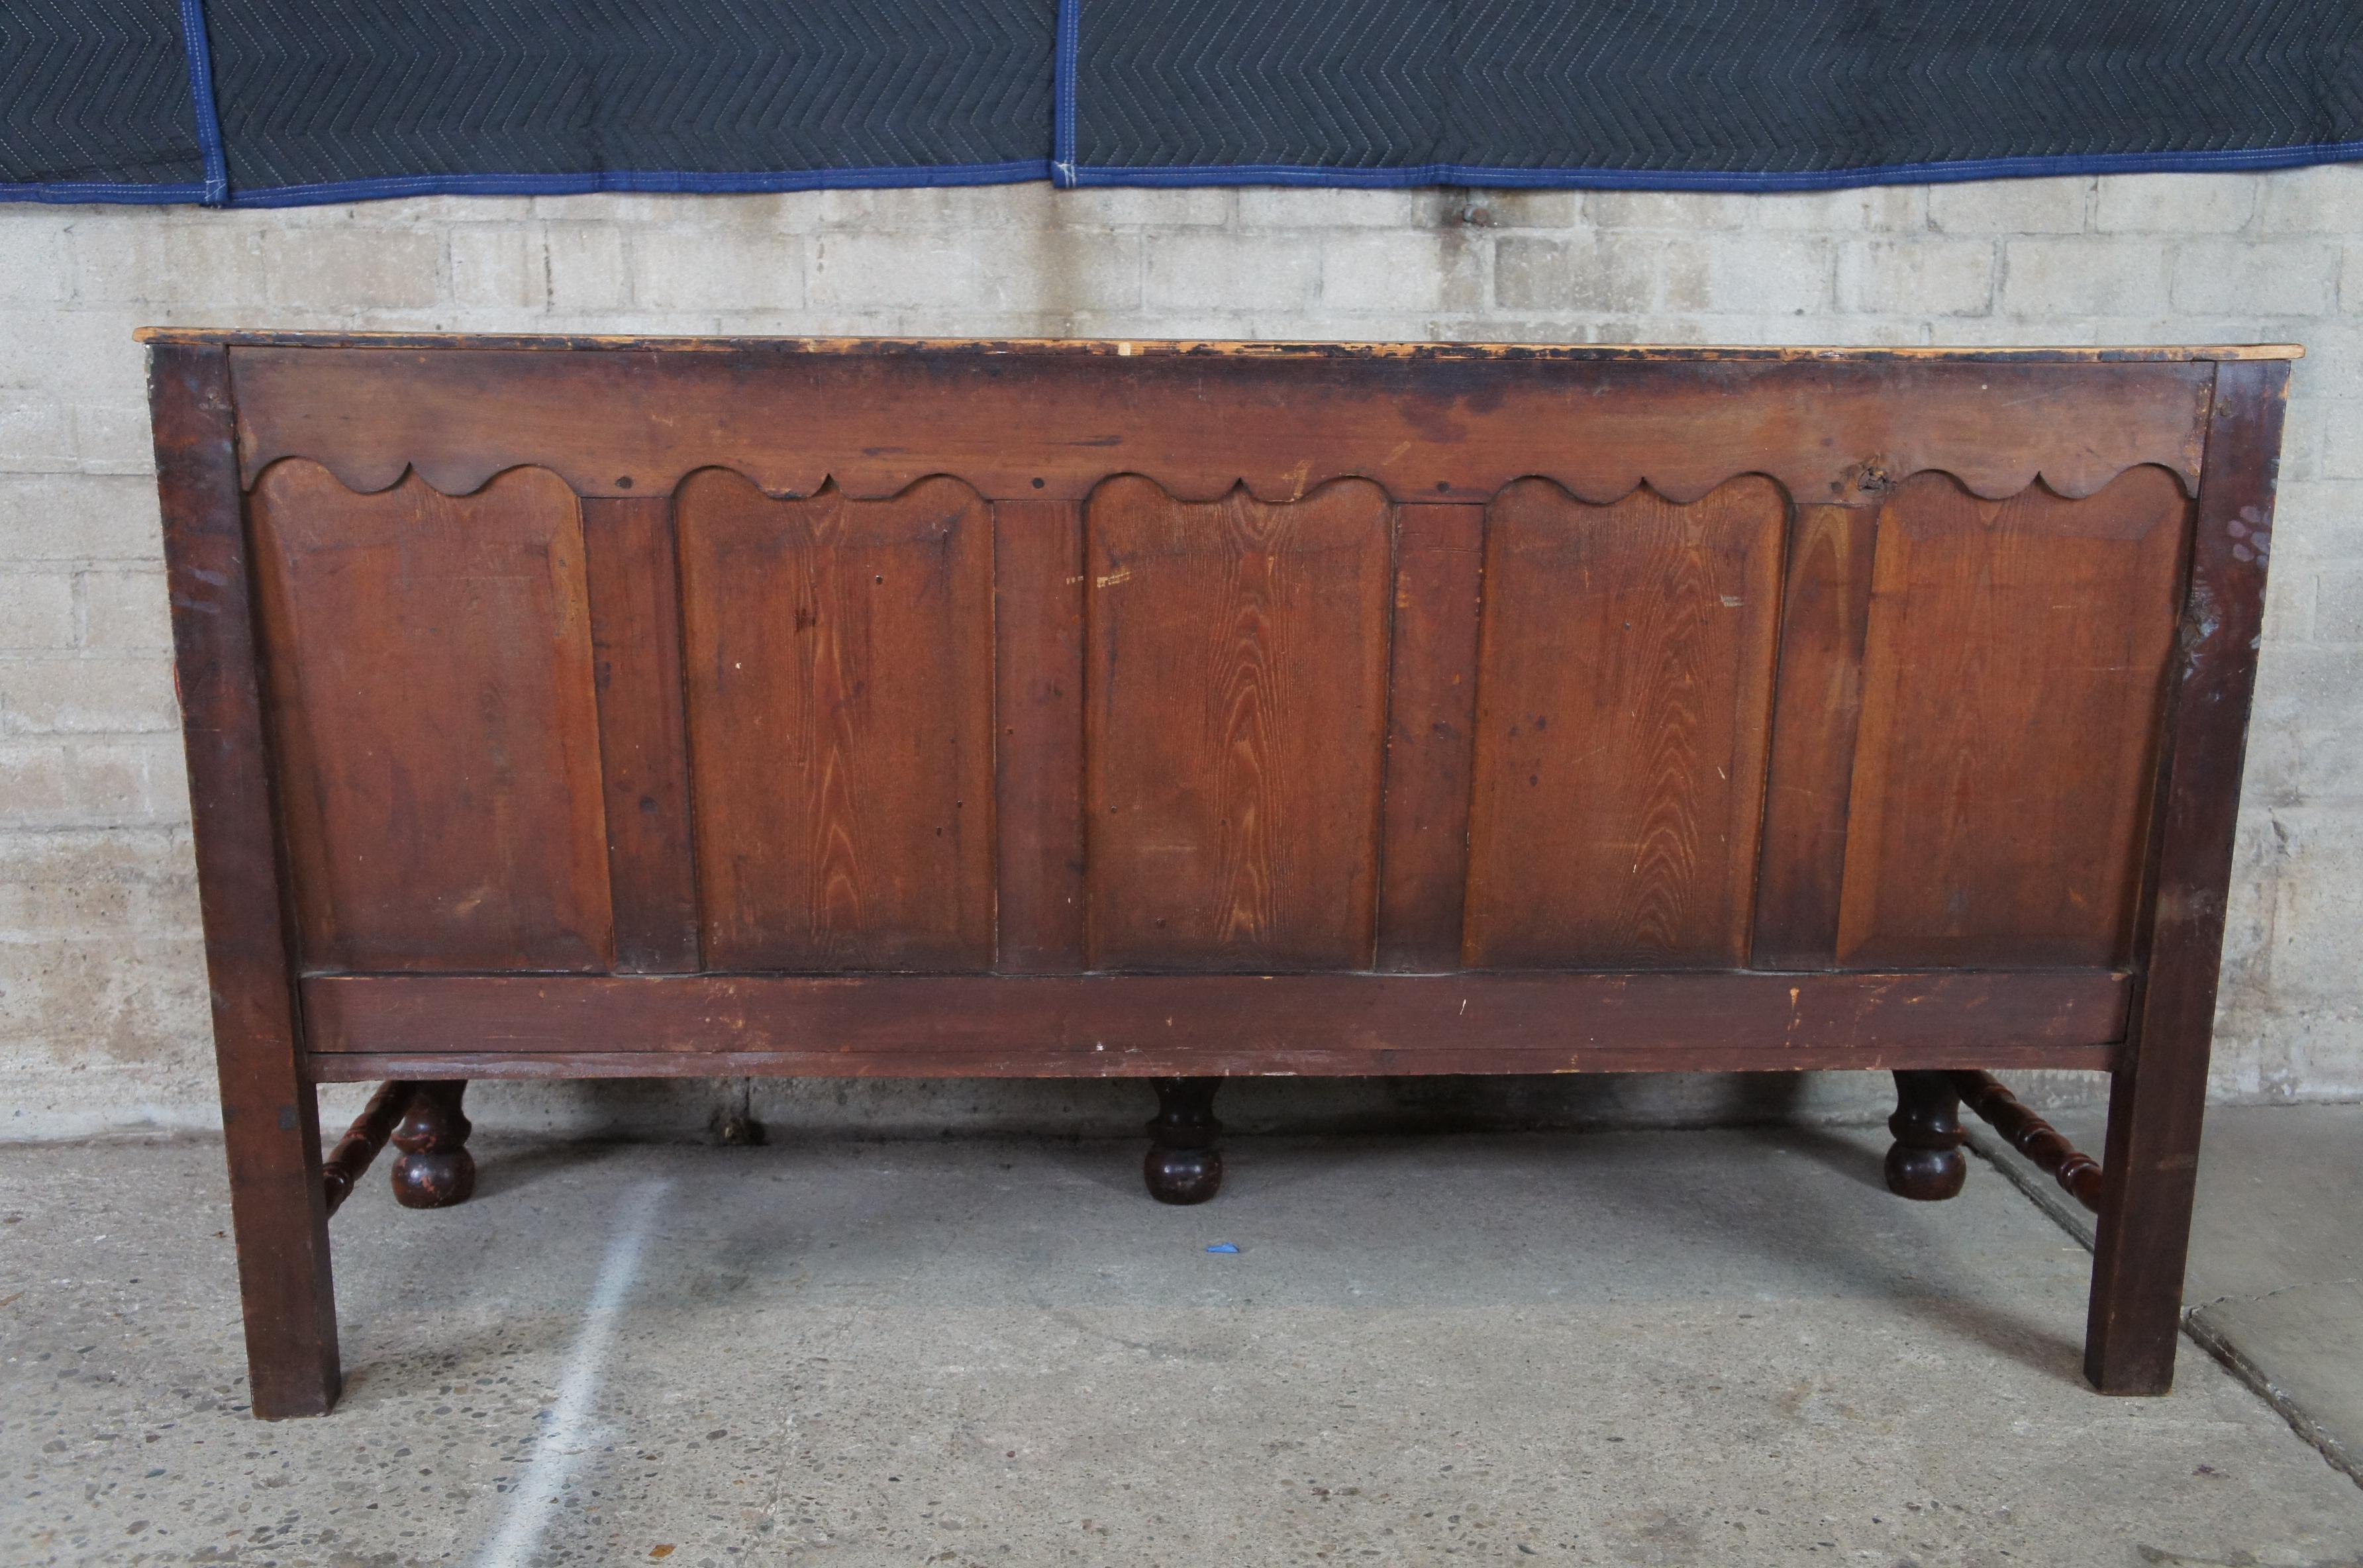 Antique 18th Century English Paneled Oak Pub Bench Settle Pew Gothic Revival For Sale 1